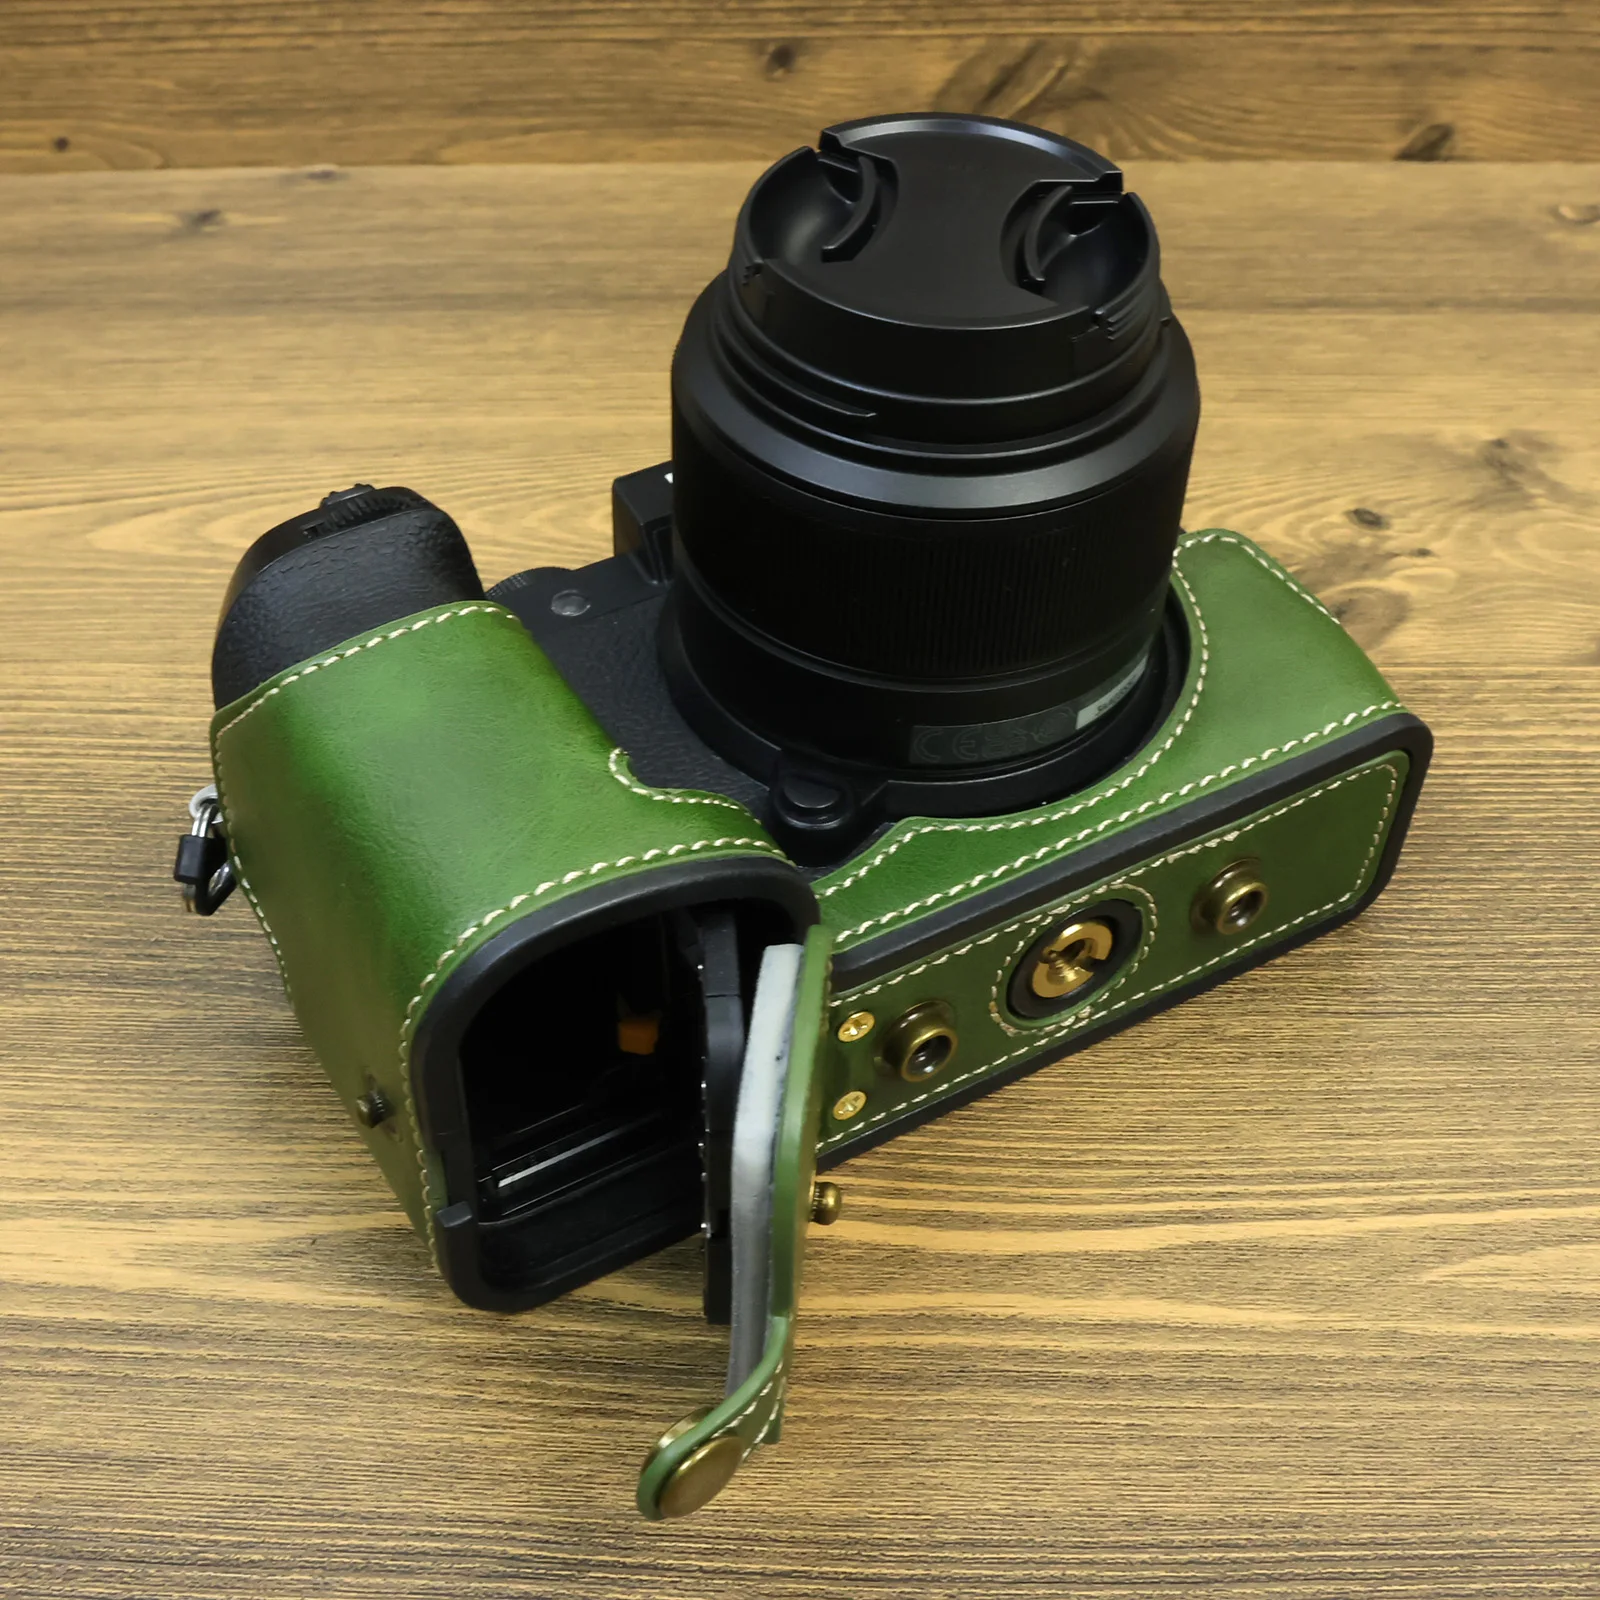 Кожаная сумка для фотоаппарата CozyShot HQ, чехол-ручка, ремешок для FUJIFILM Fuji X-S20 с объективом 15-45 мм2